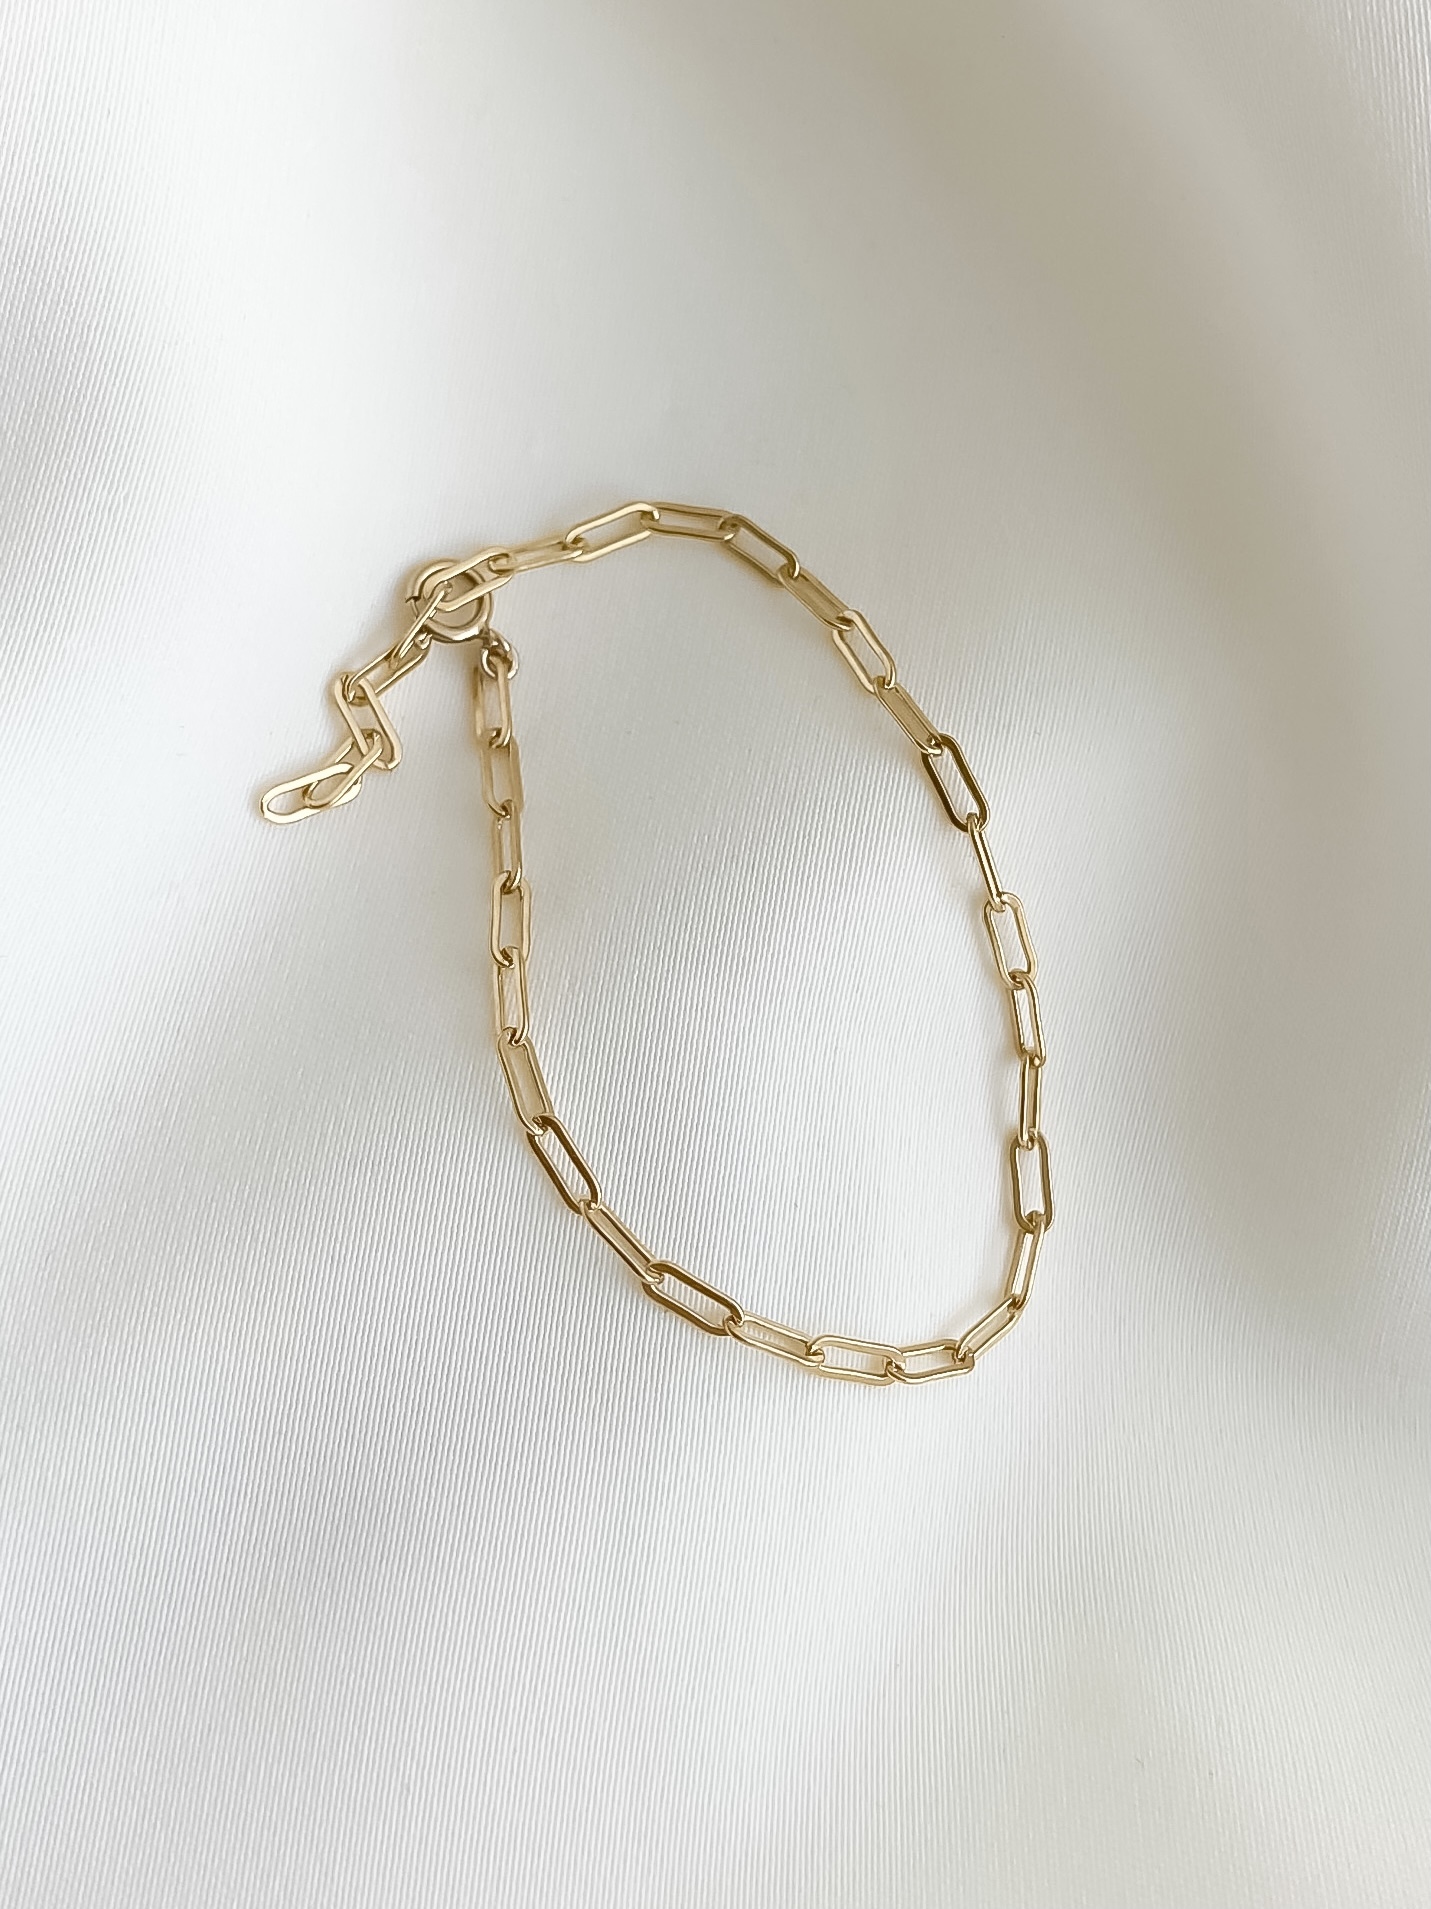 Gold Chain Bracelet 14kgf 注金細鏈條手鏈